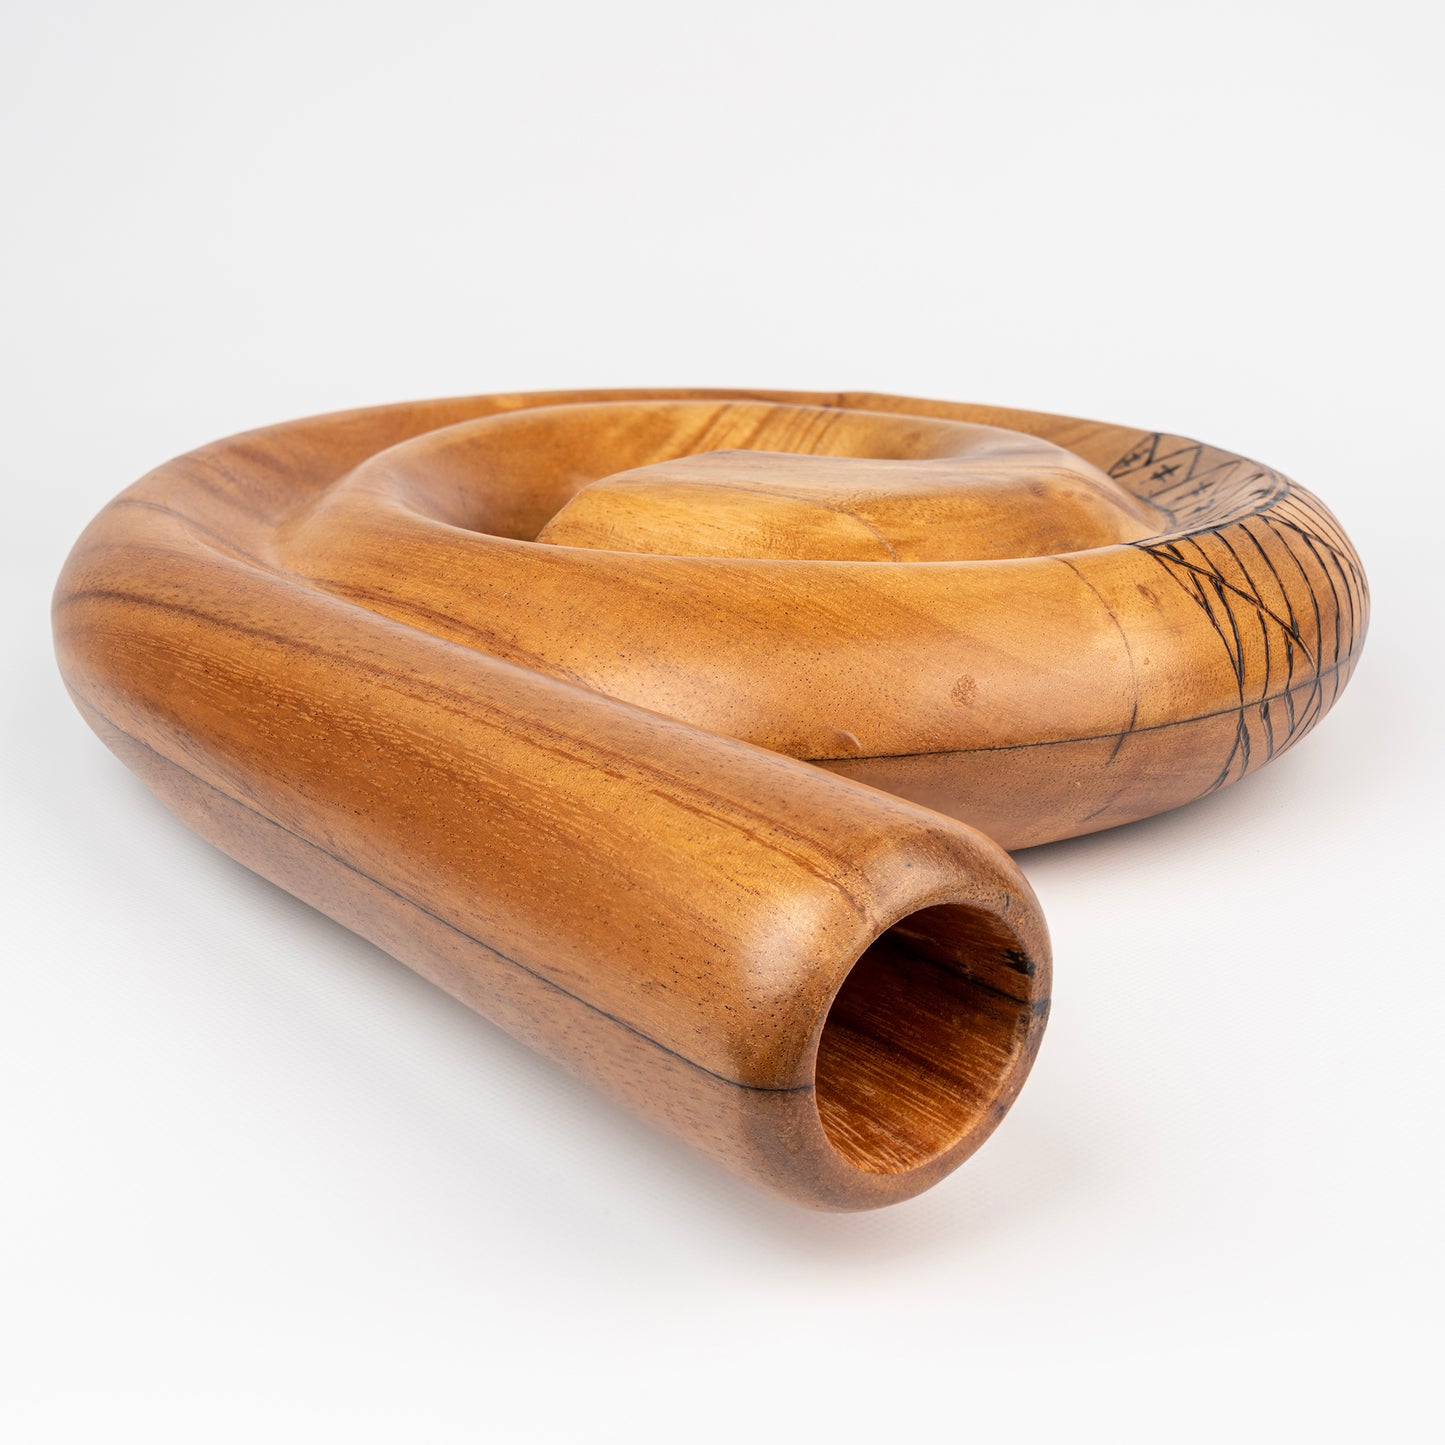 Spiral Didgeridoo / Tribal